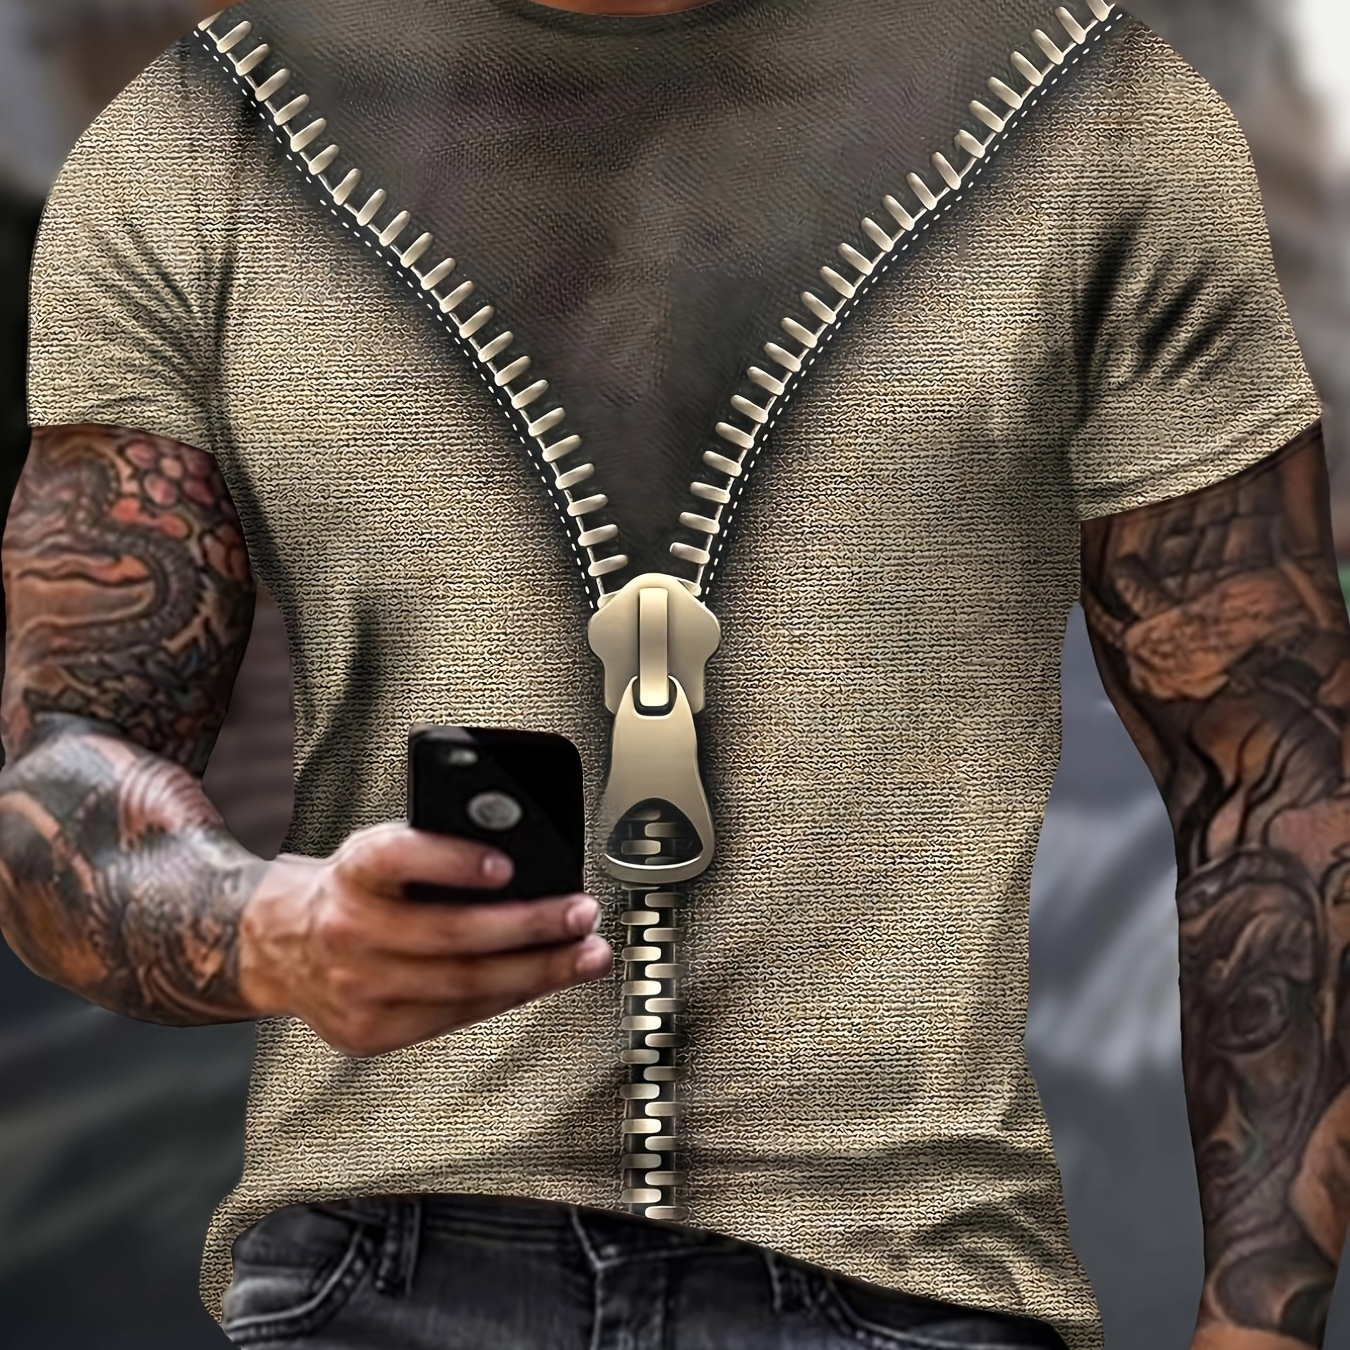 

Men's 3d Digital Giant Zipper Pattern Print T-shirt, Novel And Stylish Crew Neck Short Sleeve Tee For Summer, Tops For Leisurewear